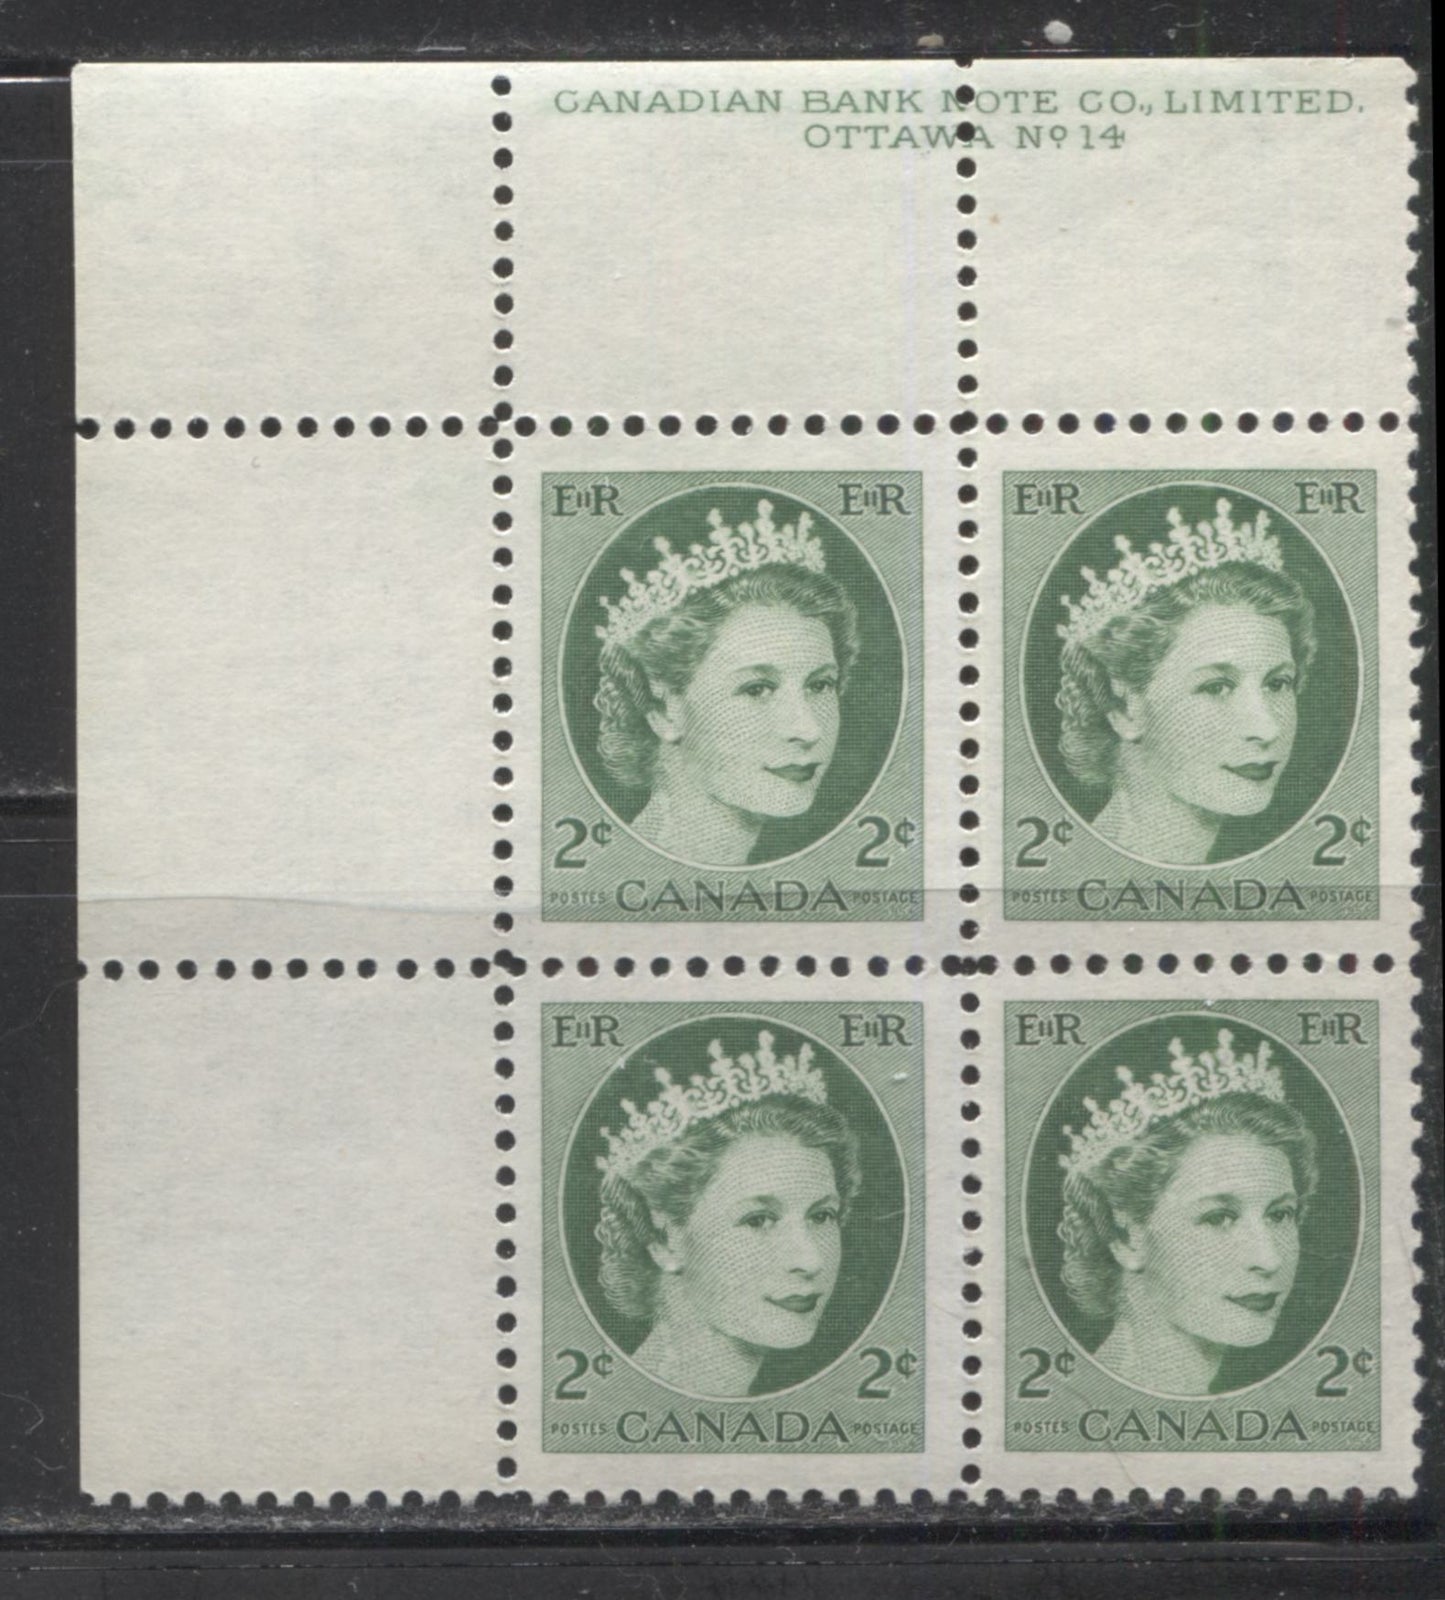 Canada #338ii 2c Deep Bright Green Queen Elizabeth II, 1954-1962 Wilding Issue A VFNH Upper Left Plate 14 Block on Fluorescent Paper